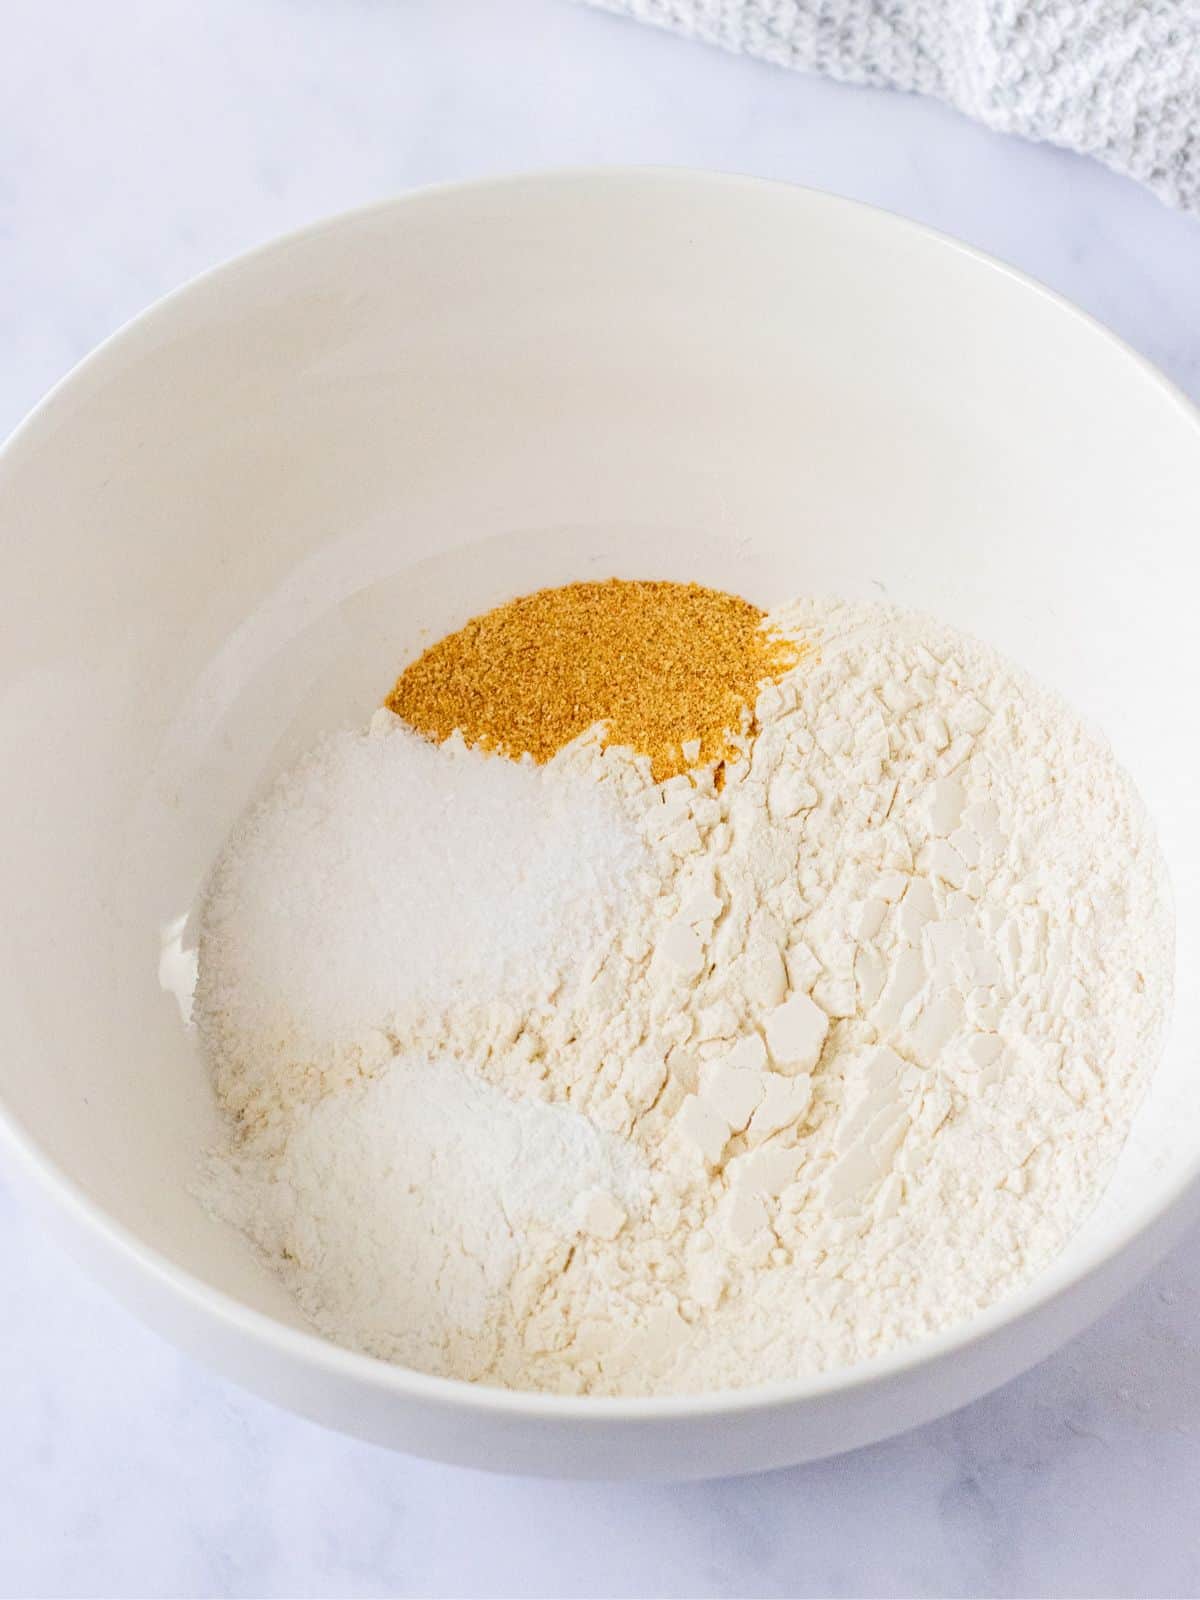 Flour, garlic powder, salt, and baking powder in a bowl.